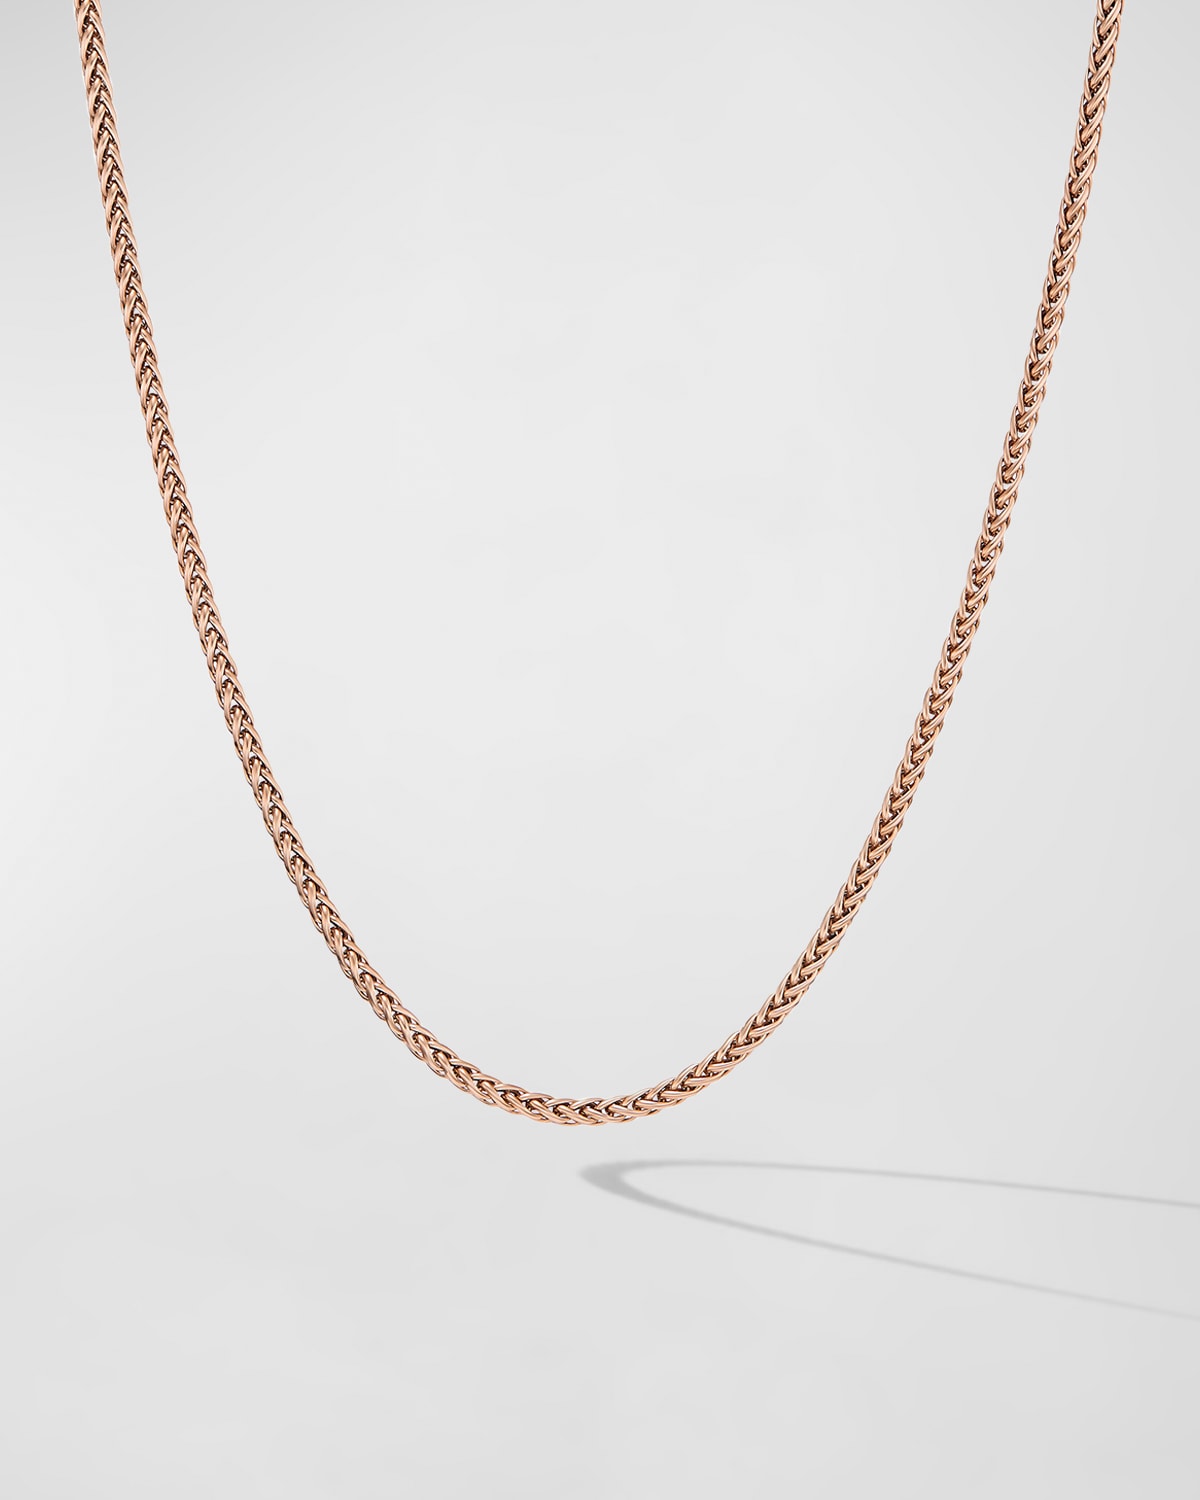 David Yurman Men's Wheat Chain Necklace in 18K Rose Gold, 2.5mm, 20"L